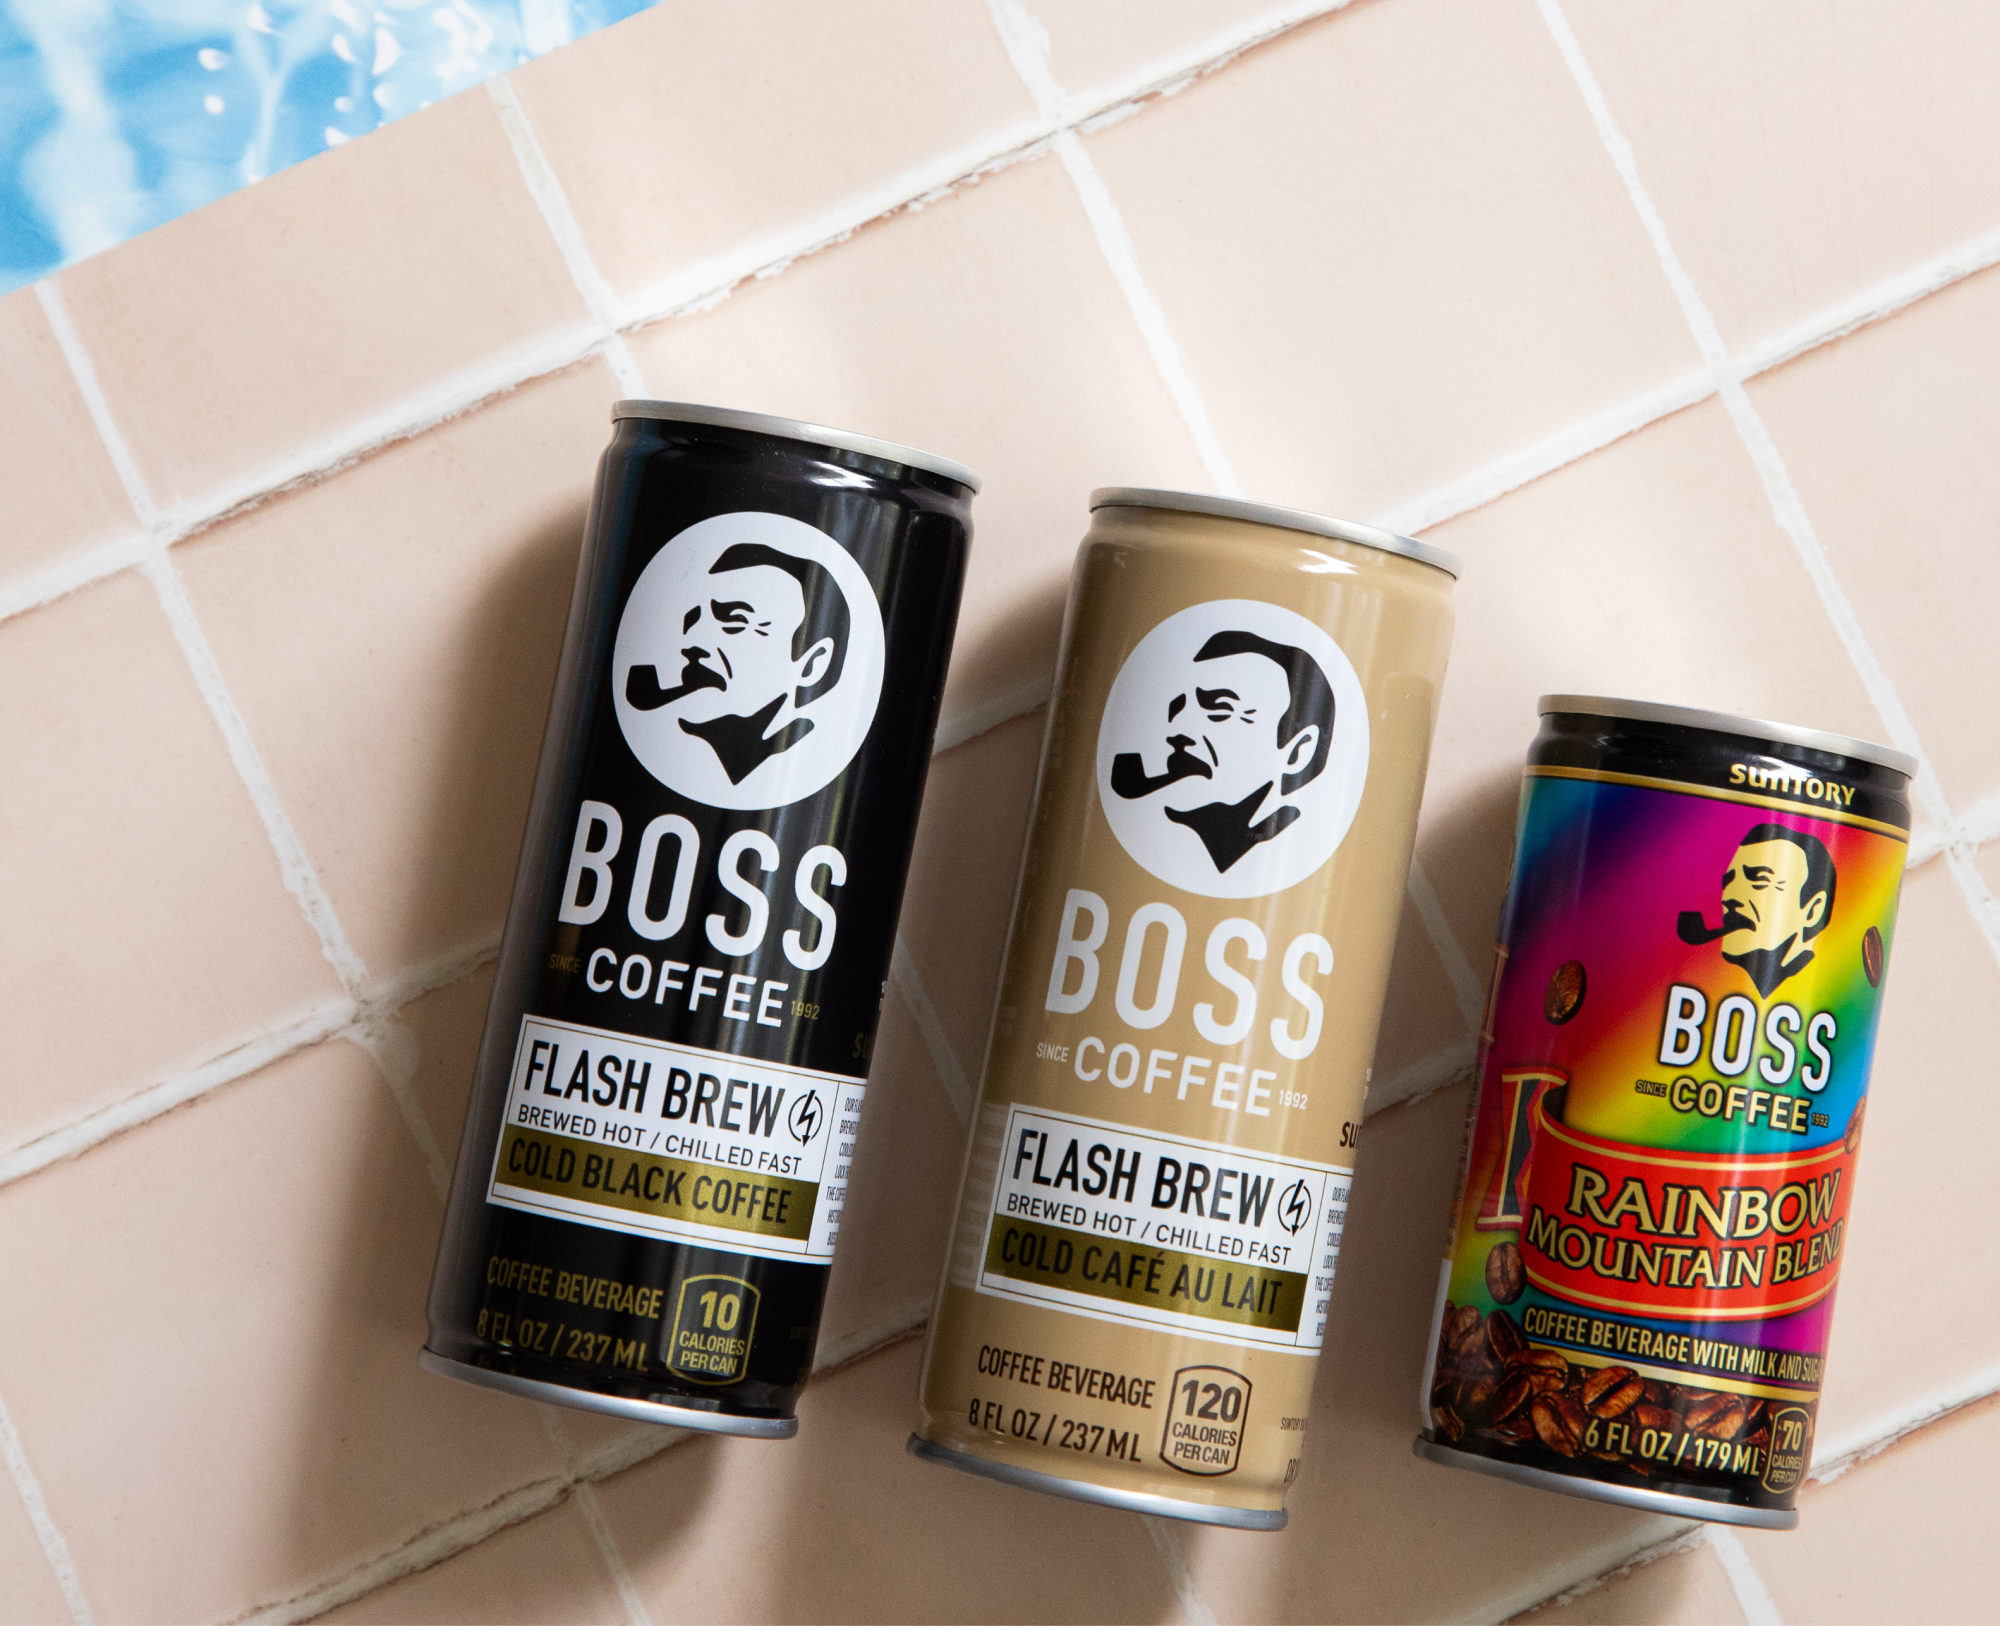 A trio of BOSS Coffee flavors pool-side